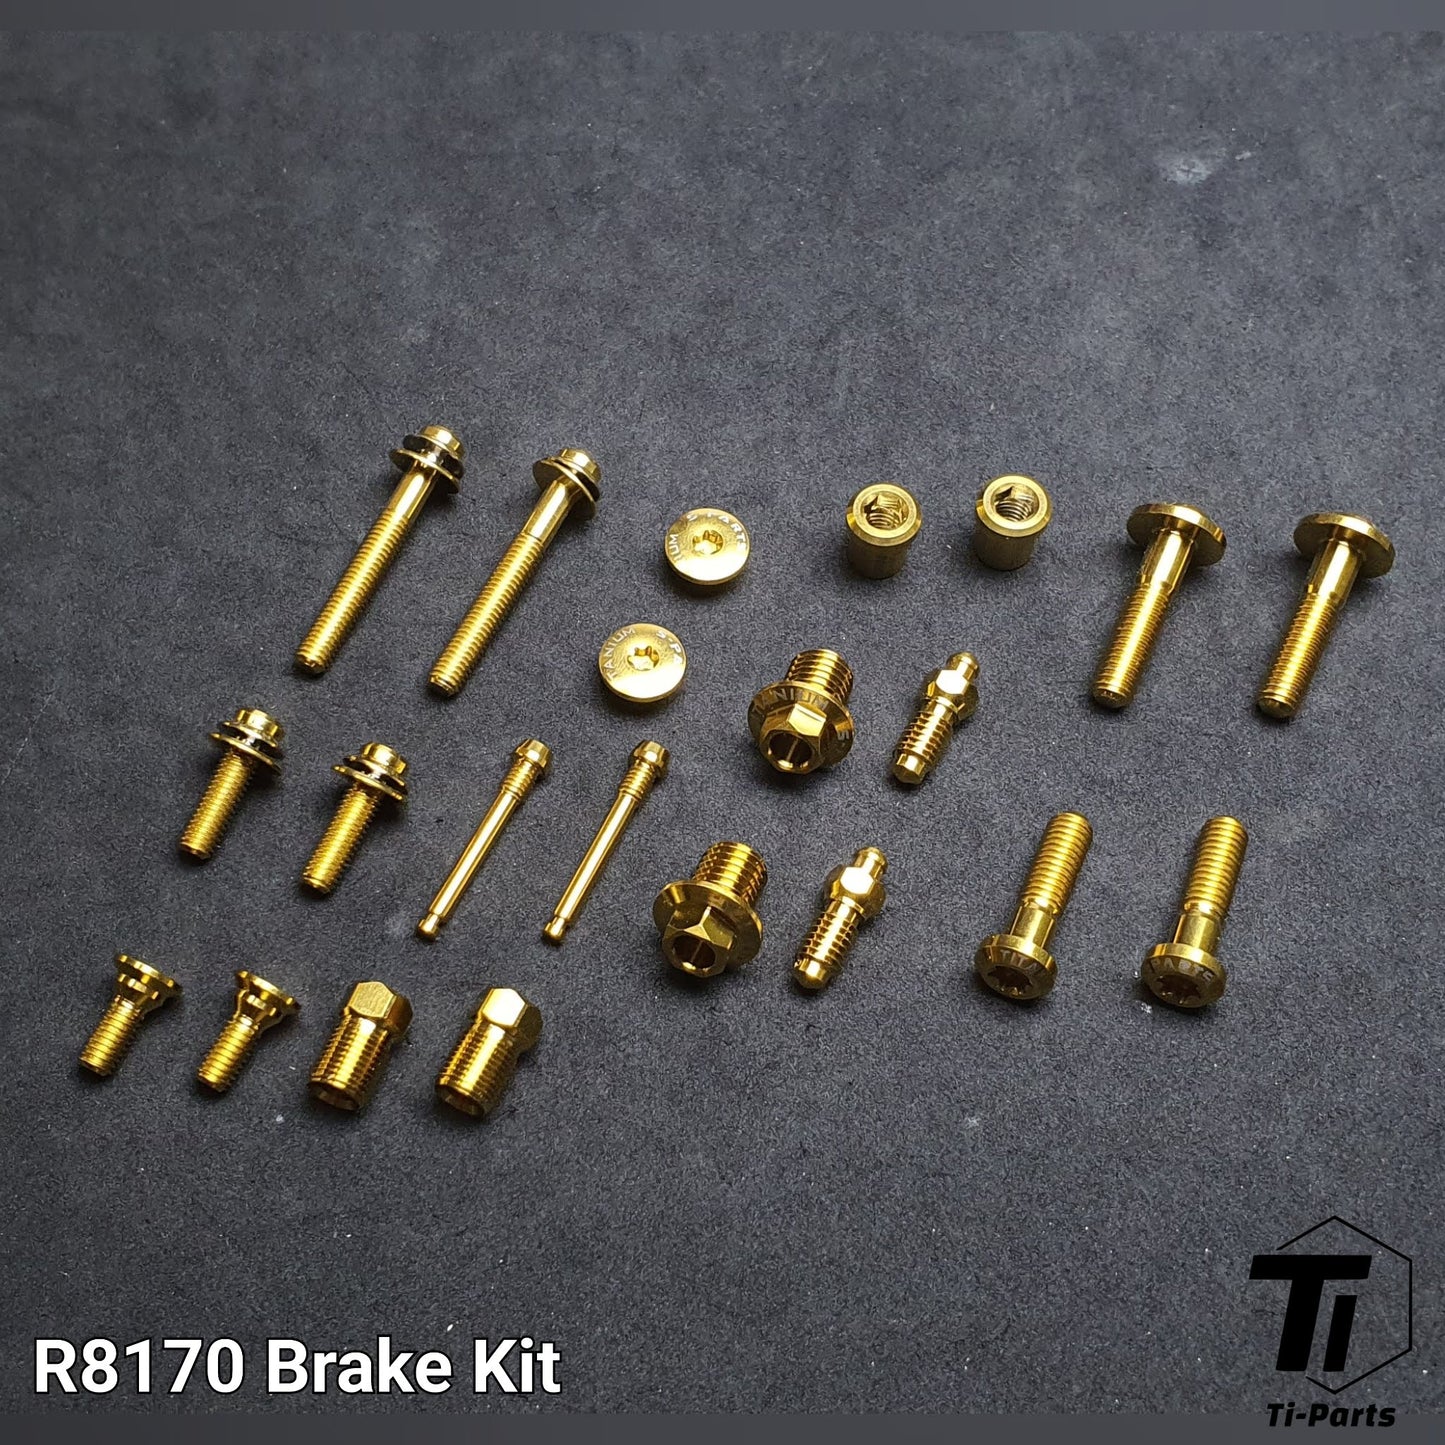 Titanium Upgrade Kit pro R9270 R8170 R7170 Shimano | Dura Ace Ultegra 105 12s R9200 R9250 R8150 Brzda hnacího ústrojí | Titanový šroub